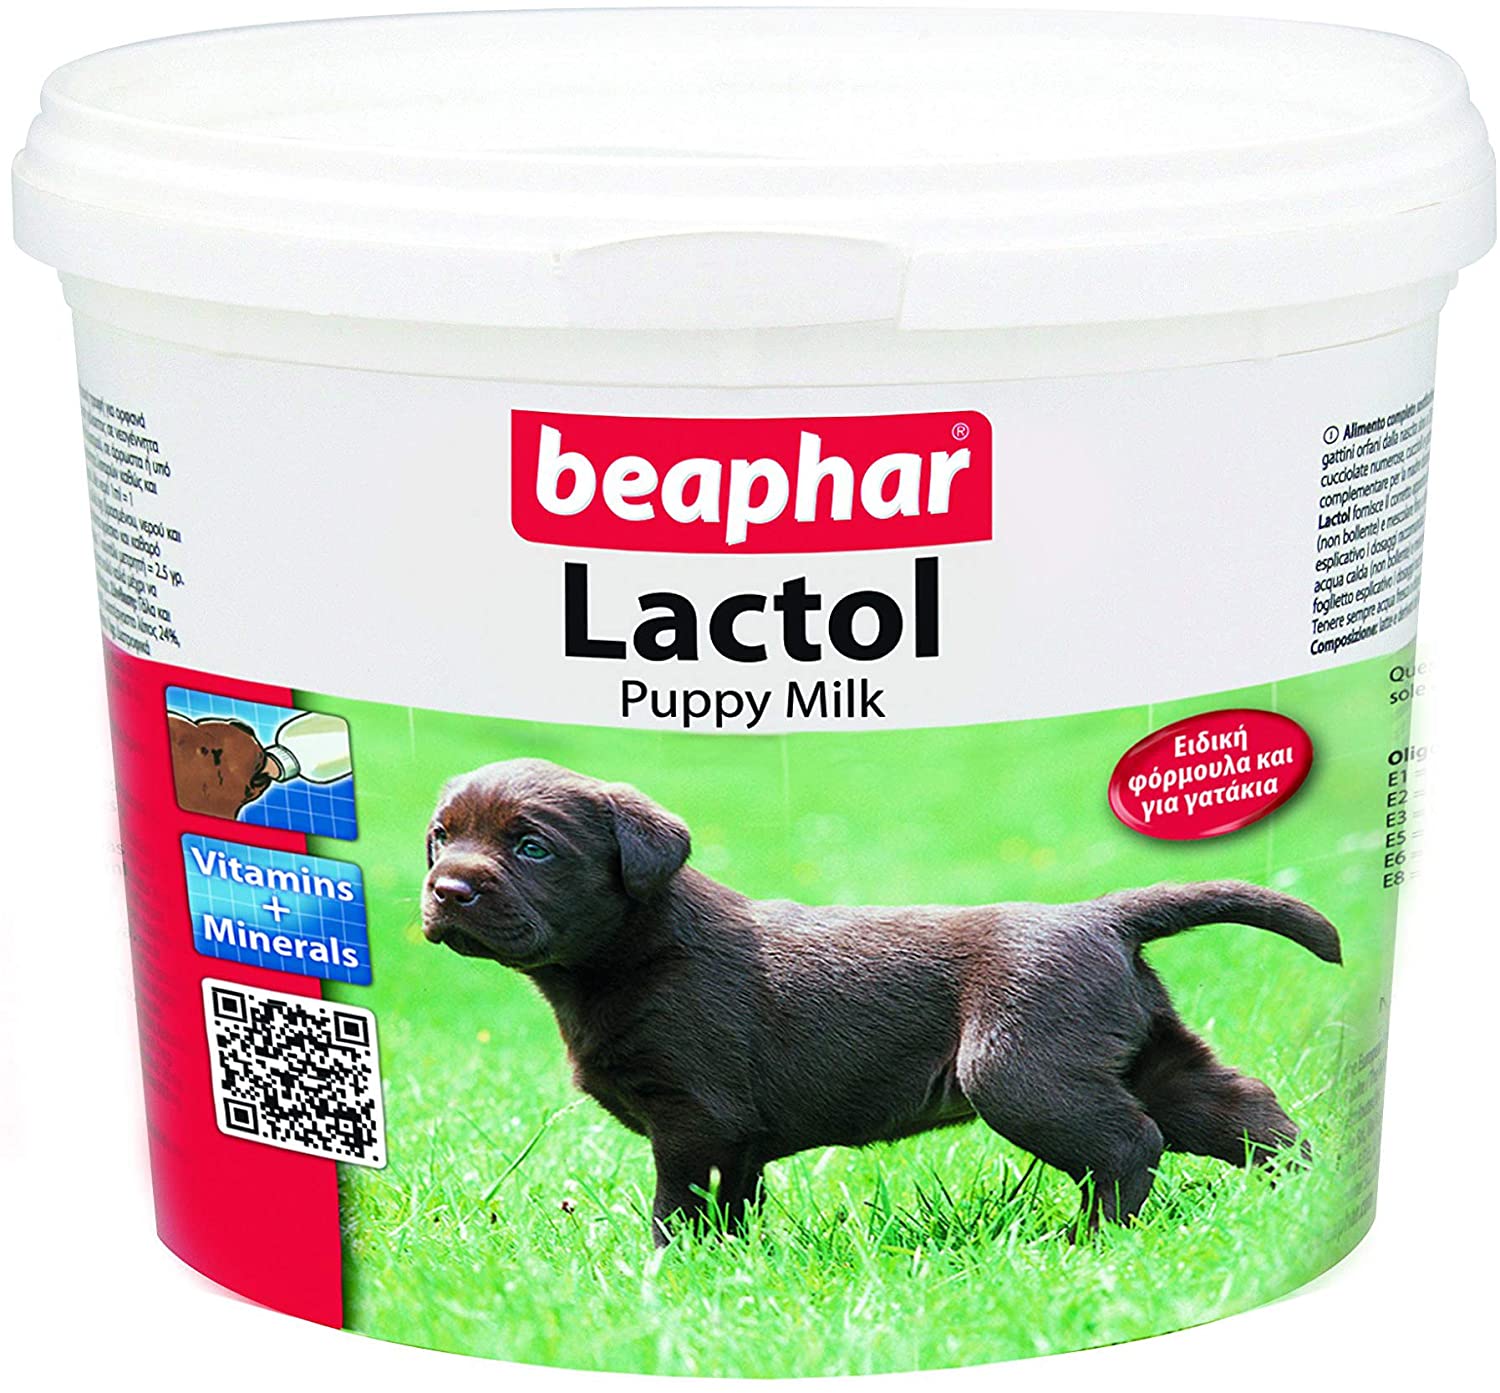  Beaphar - Leche en polvo marca Lactol para cachorros 